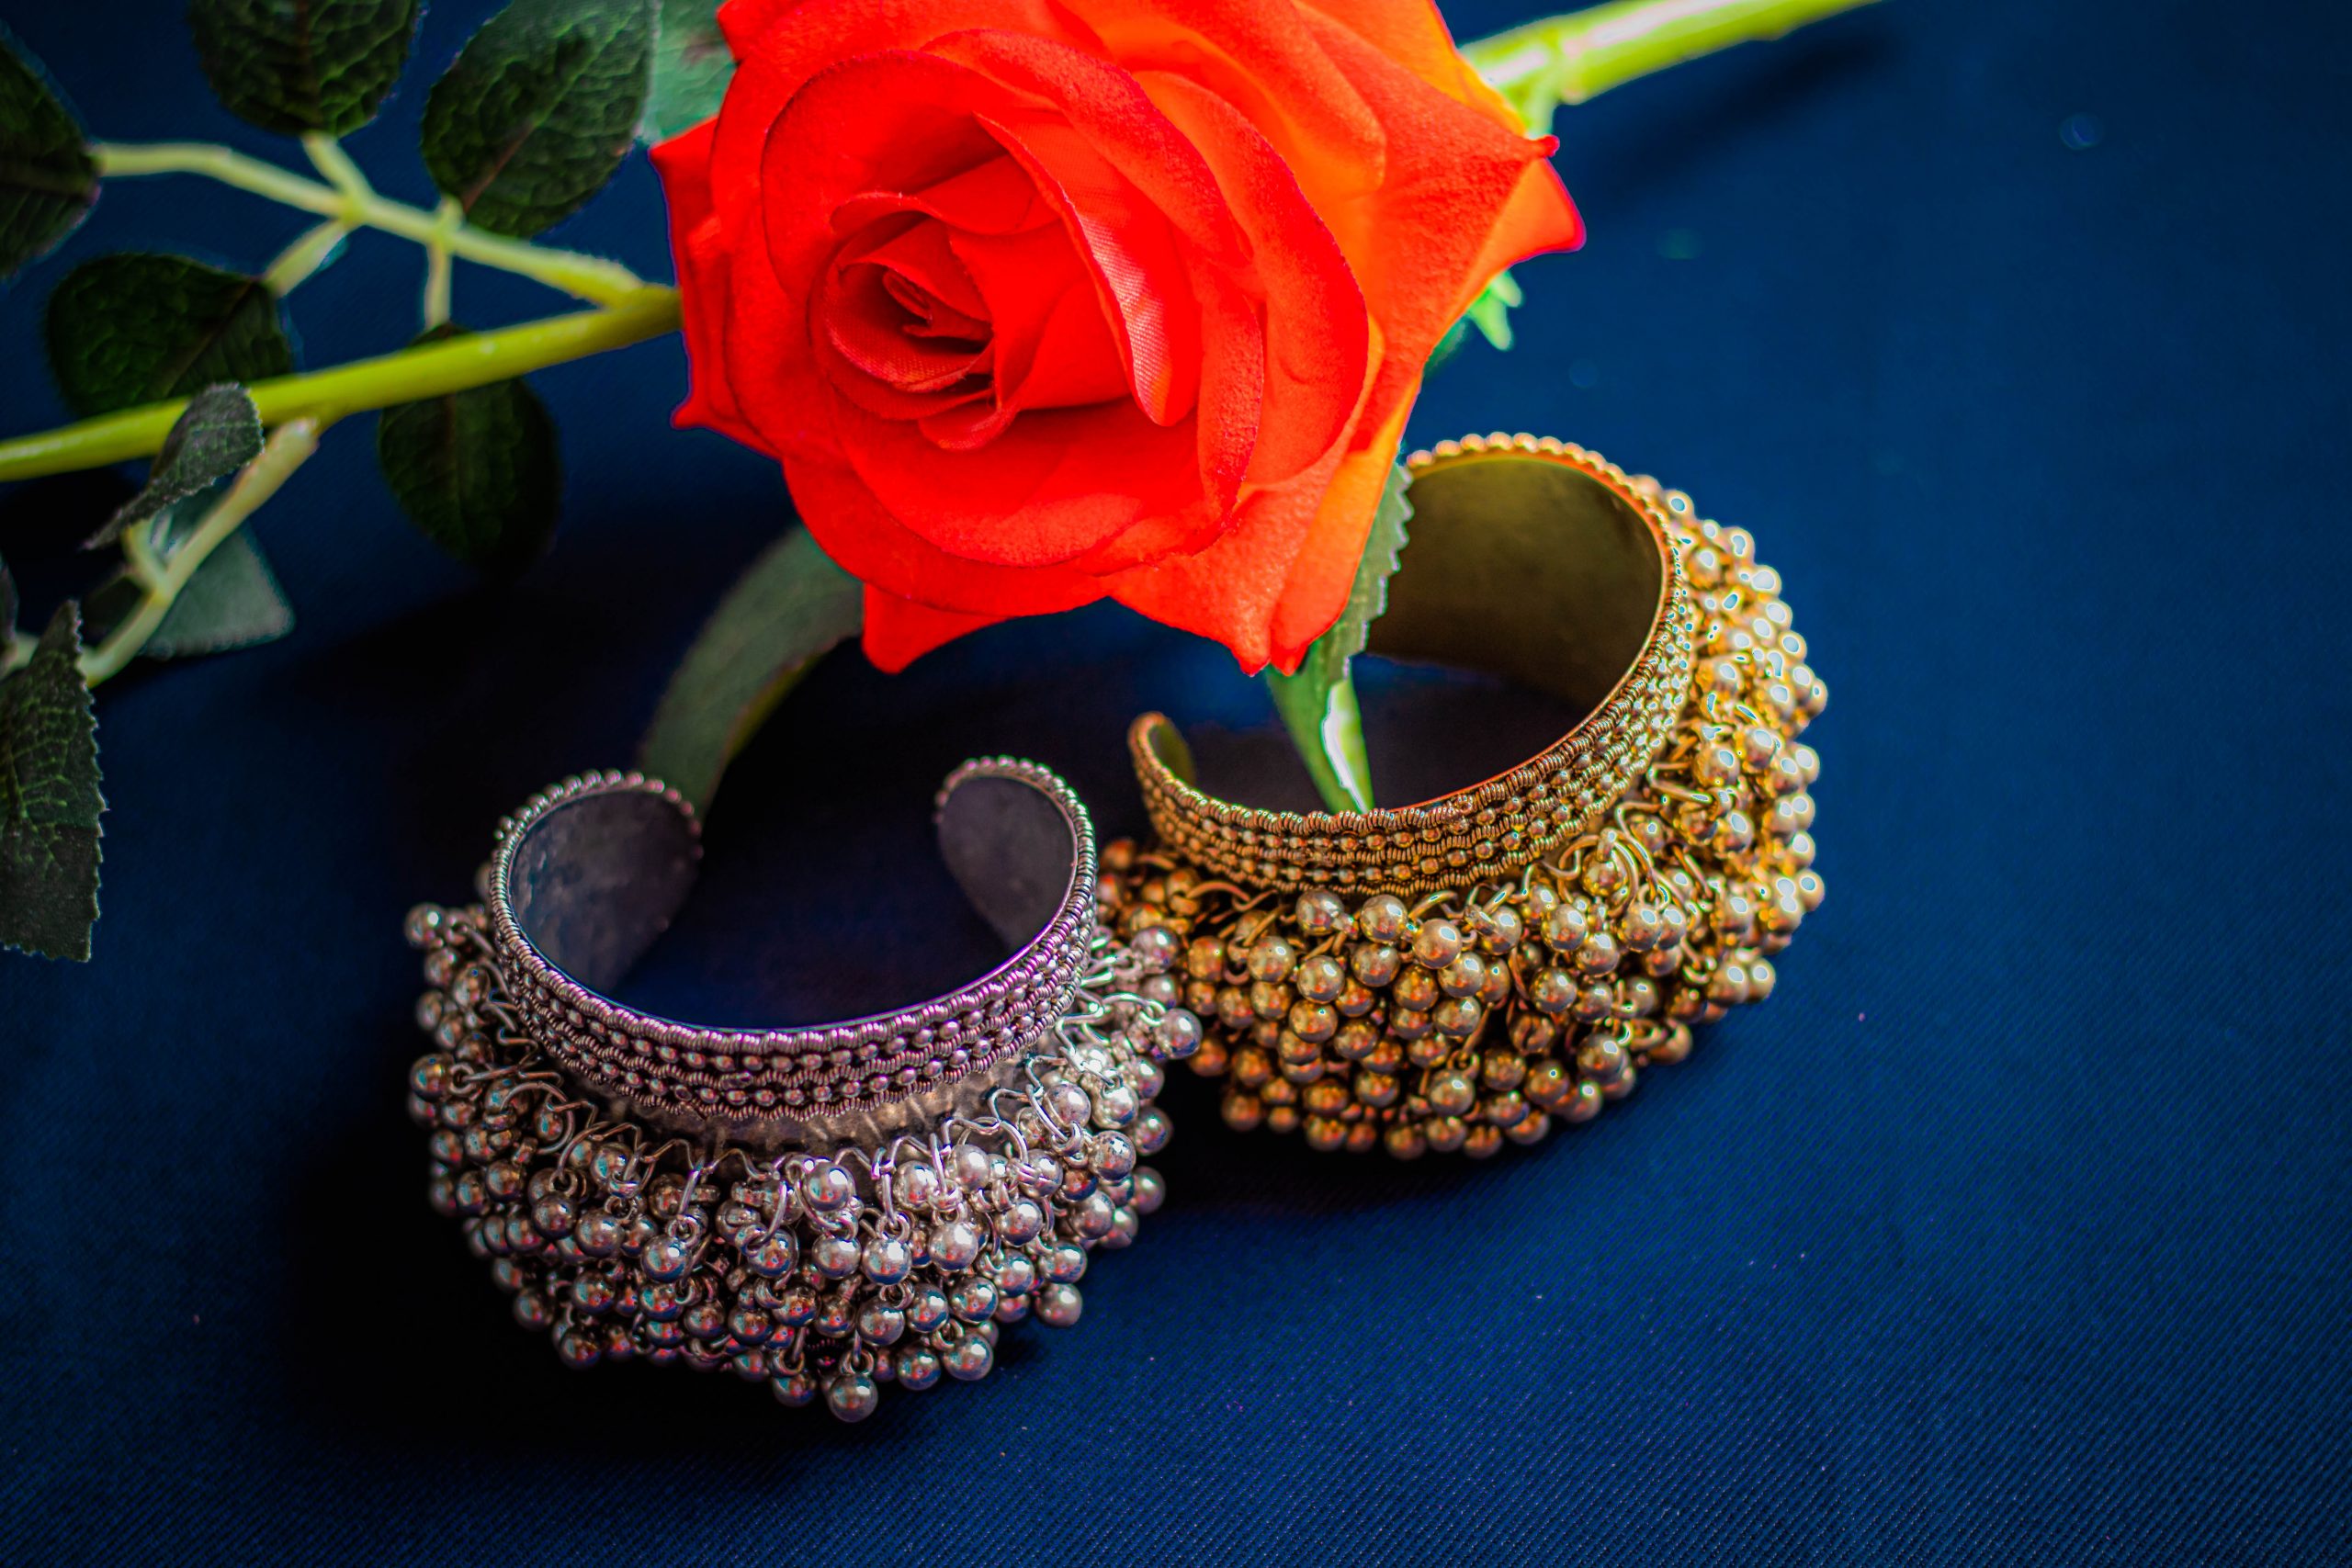 Rose and bracelets